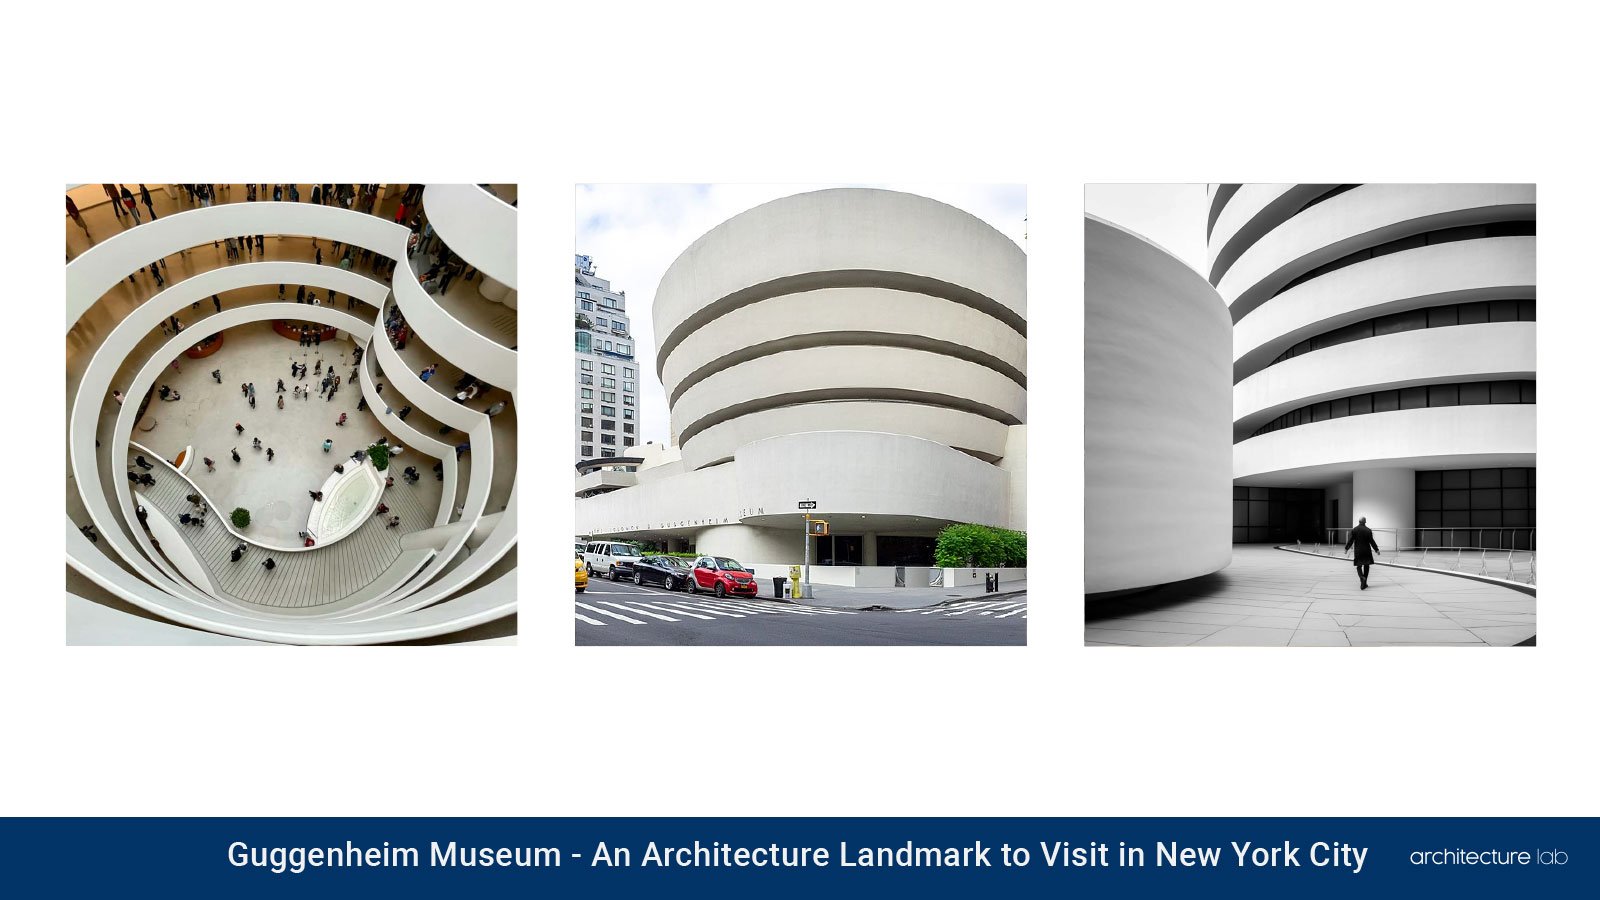 Guggenheim museum: an architecture landmark to visit in new york city